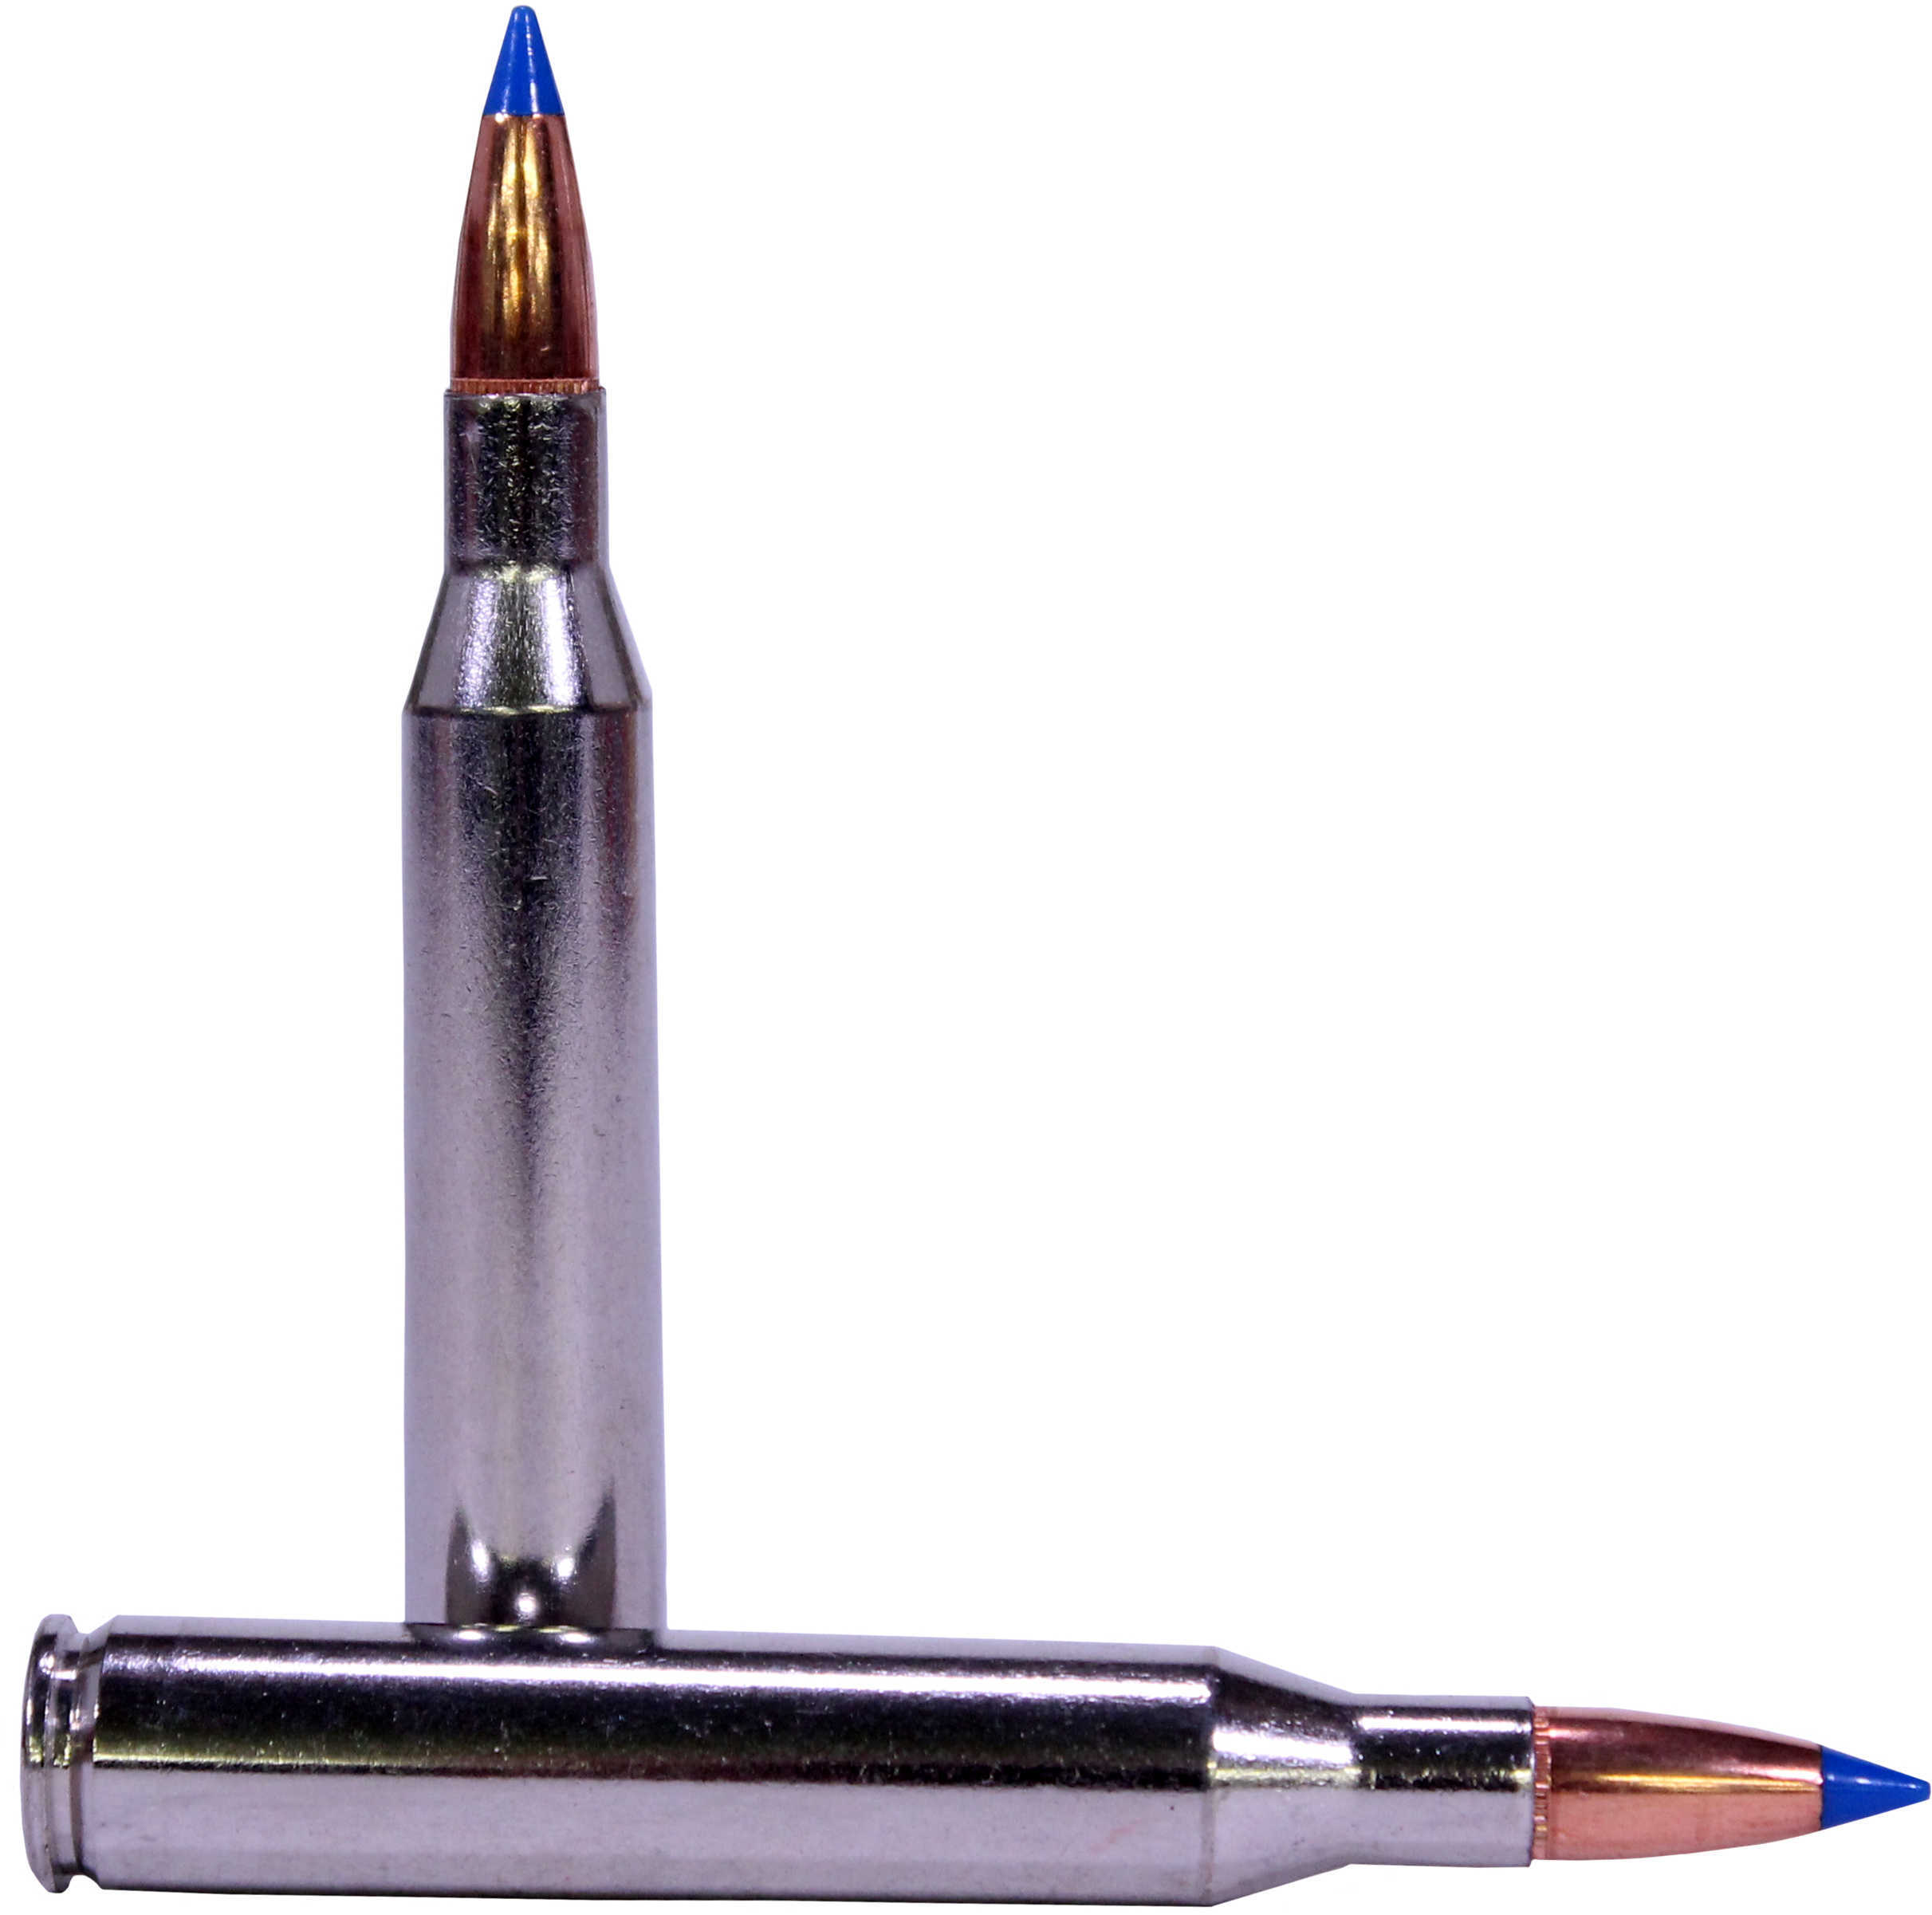 25-06 Remington 20 Rounds Ammunition Federal Cartridge 85 Grain Ballistic Tip